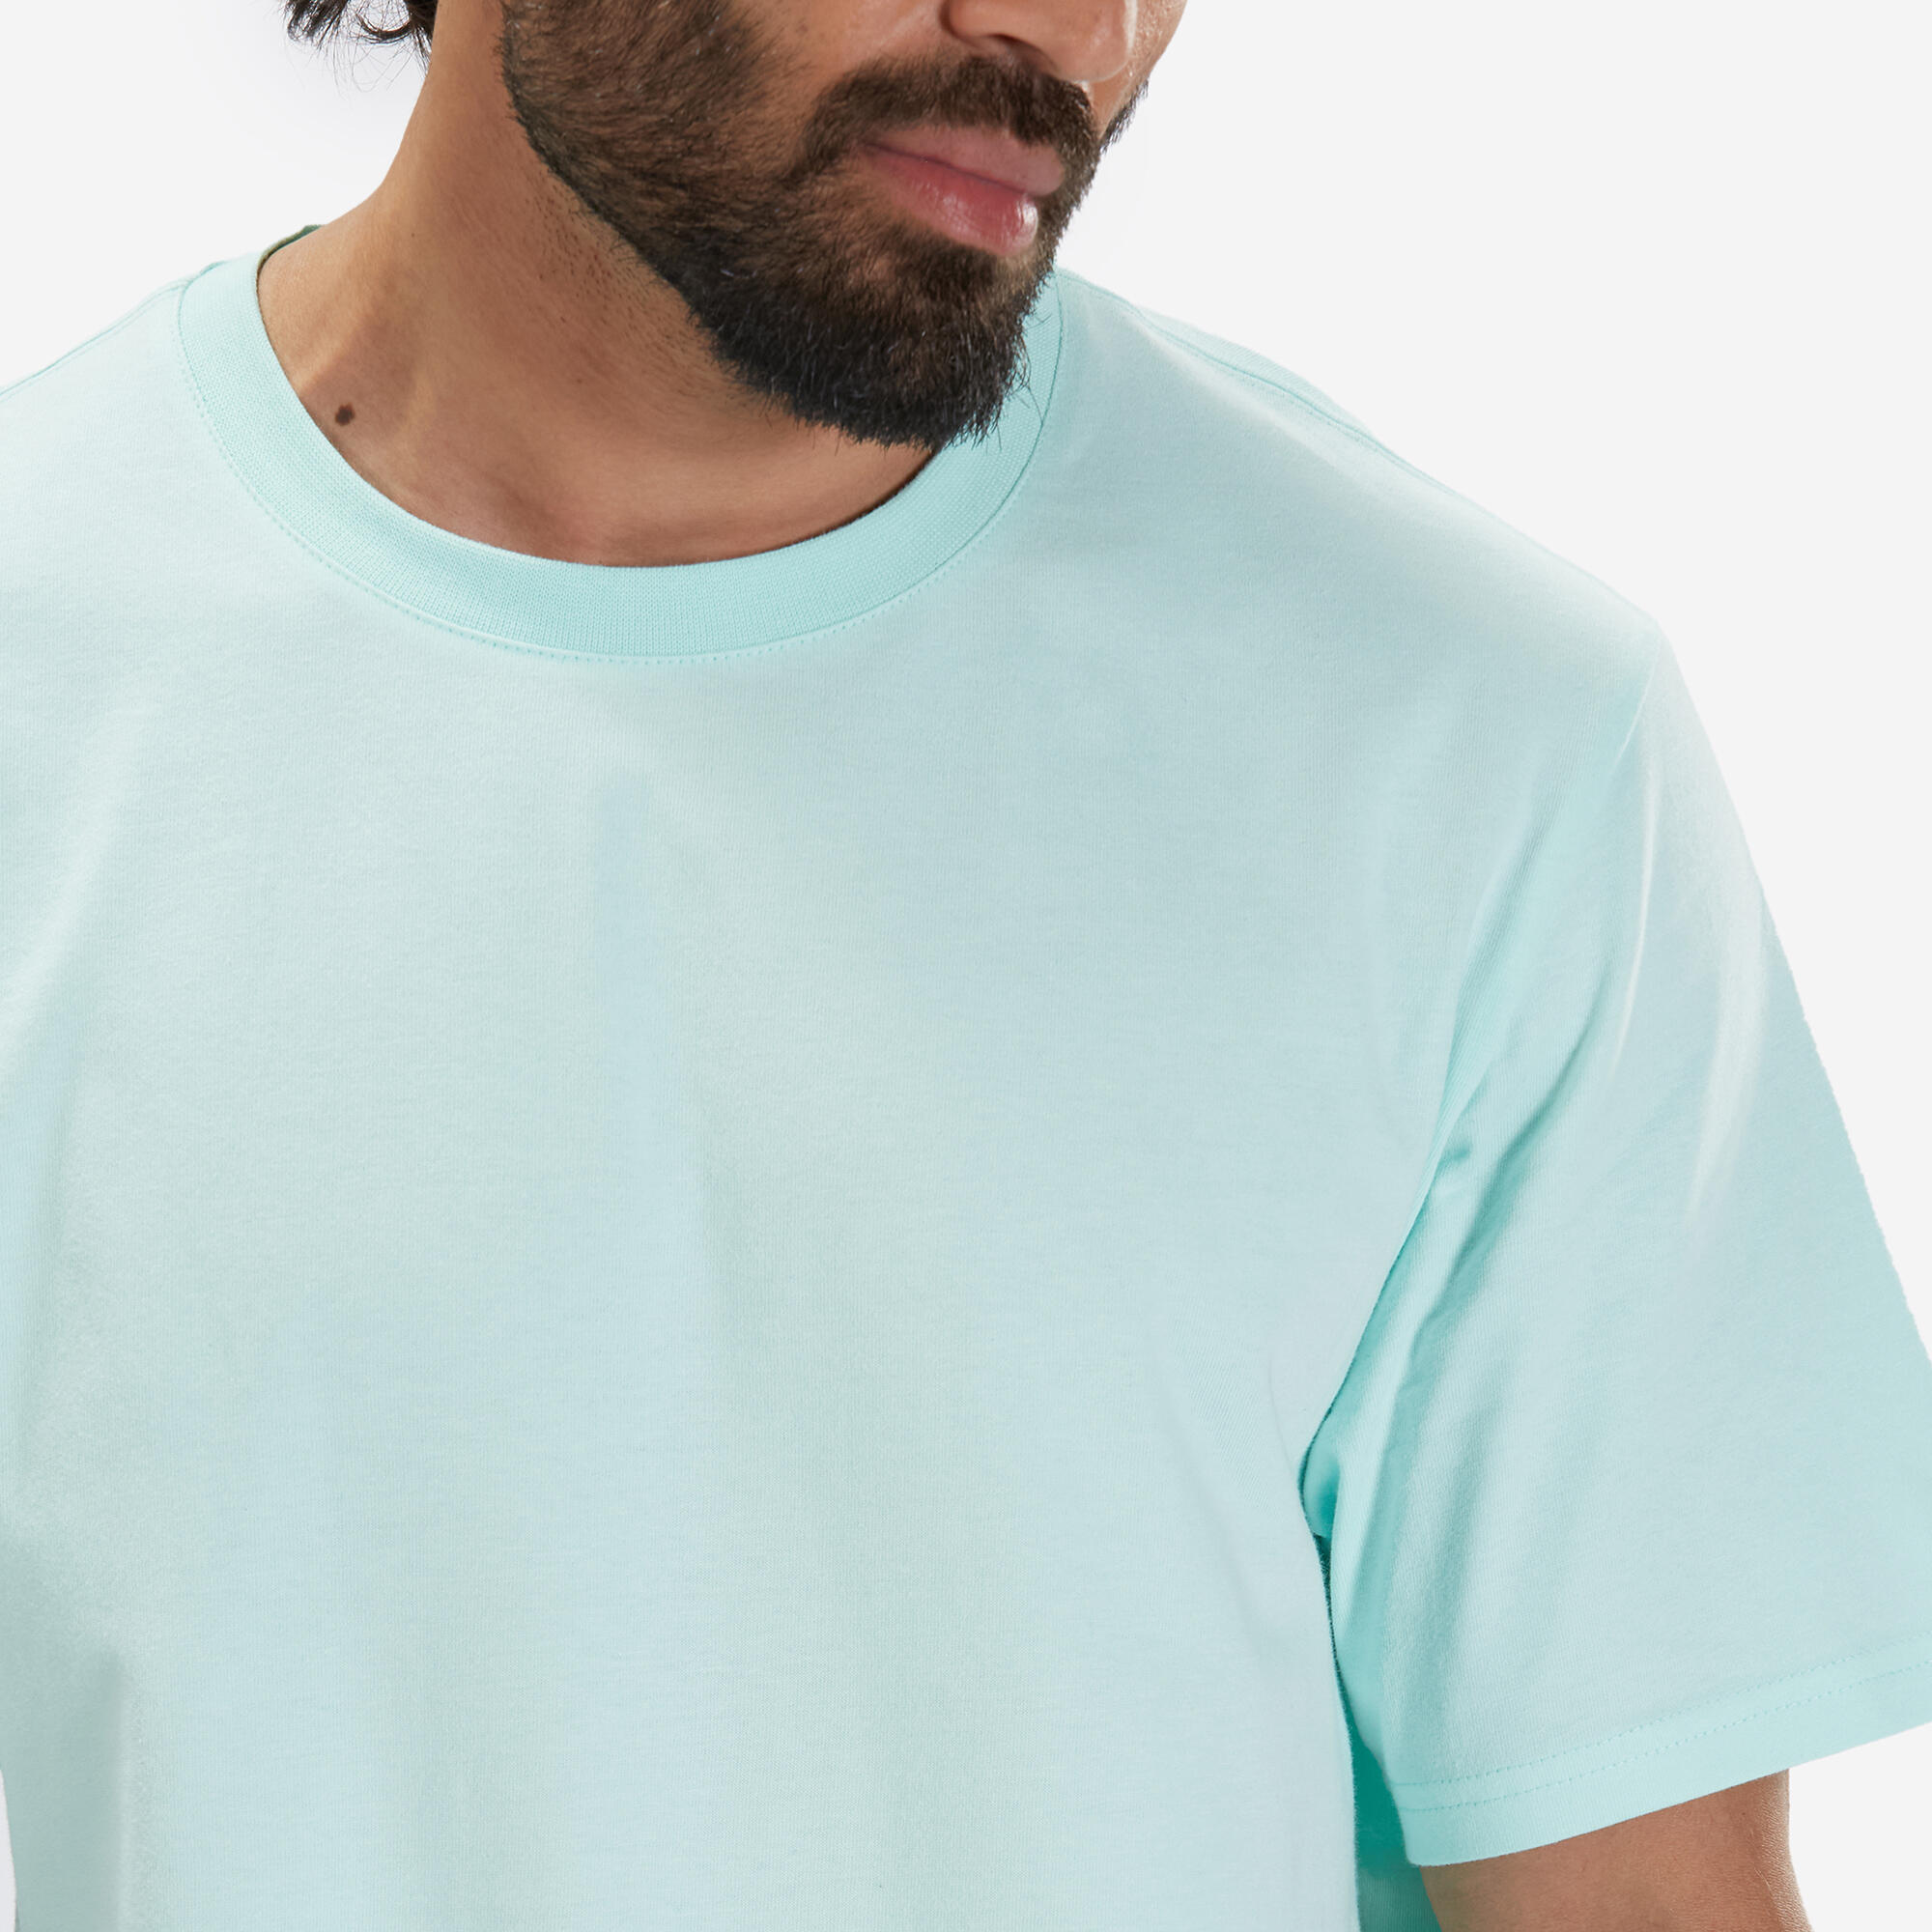 Men's Fitness T-Shirt 500 Essentials - Mint/Pastel 4/4